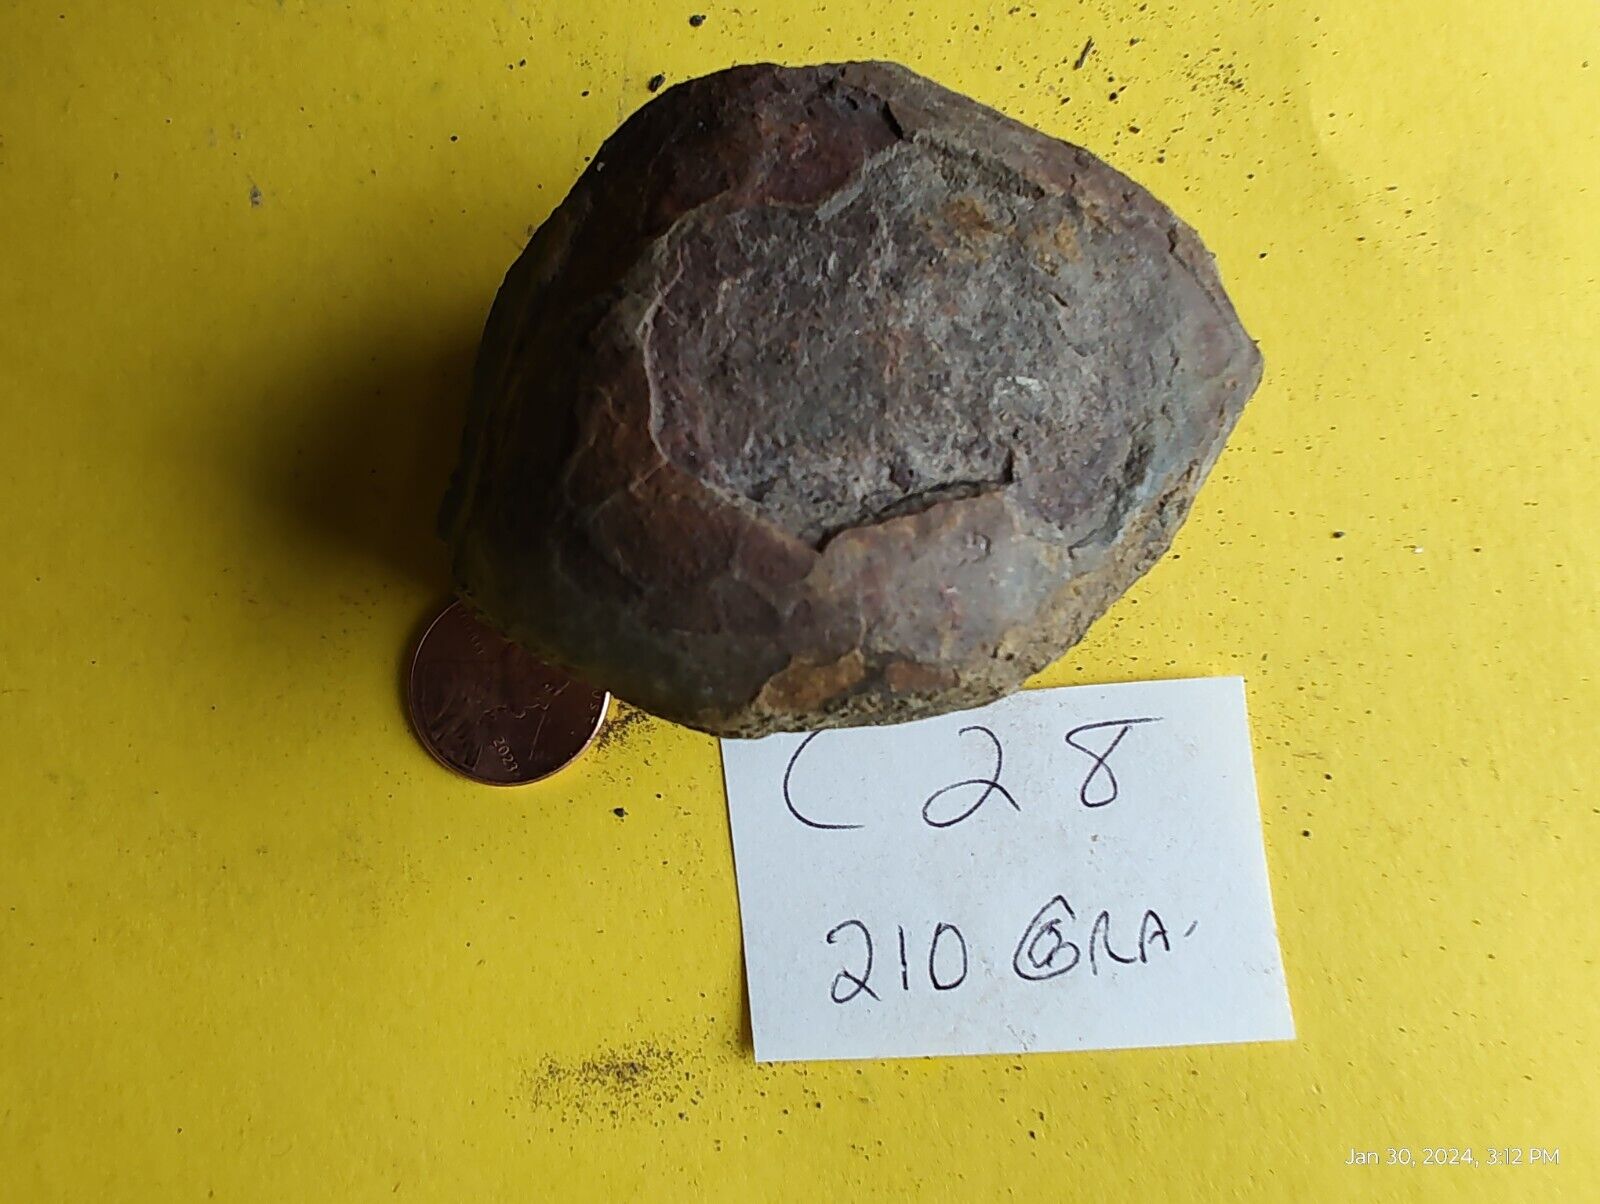 Coprolite Fossil Dinosaur Dung Poop crap Dino turd 210 gram 🦕